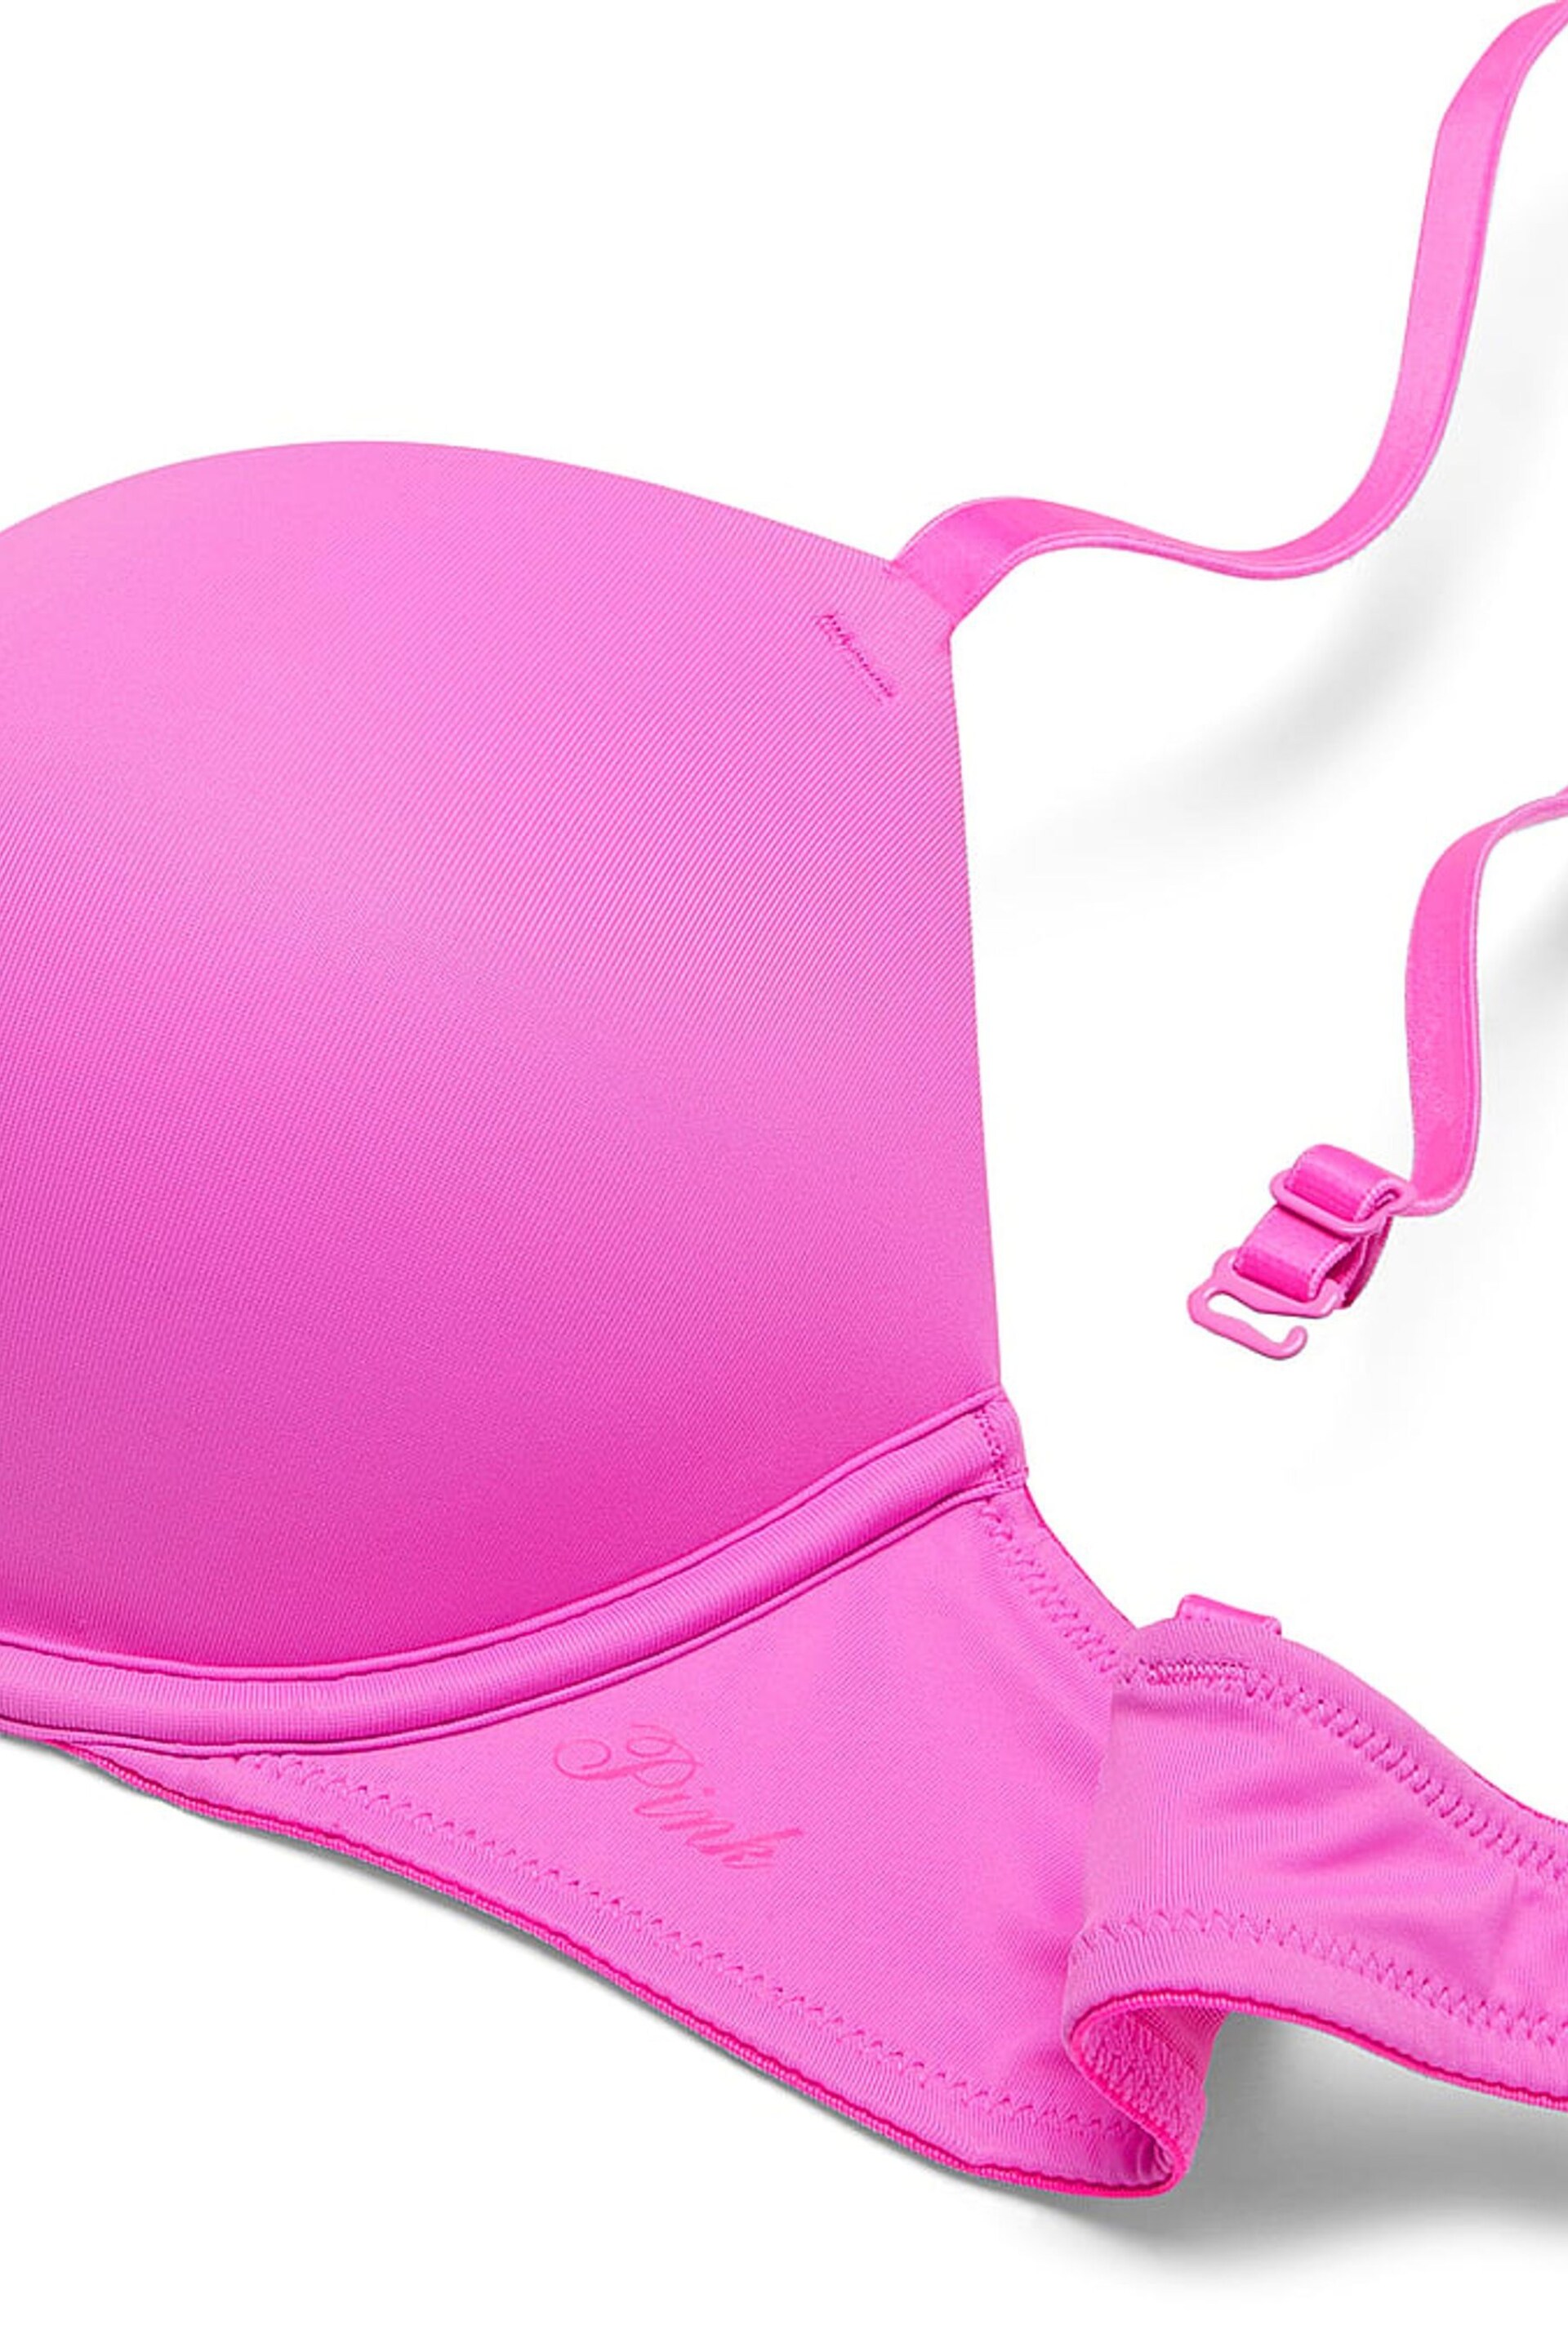 Victoria's Secret PINK Pink Berry Super Push Up Bra - Image 4 of 4